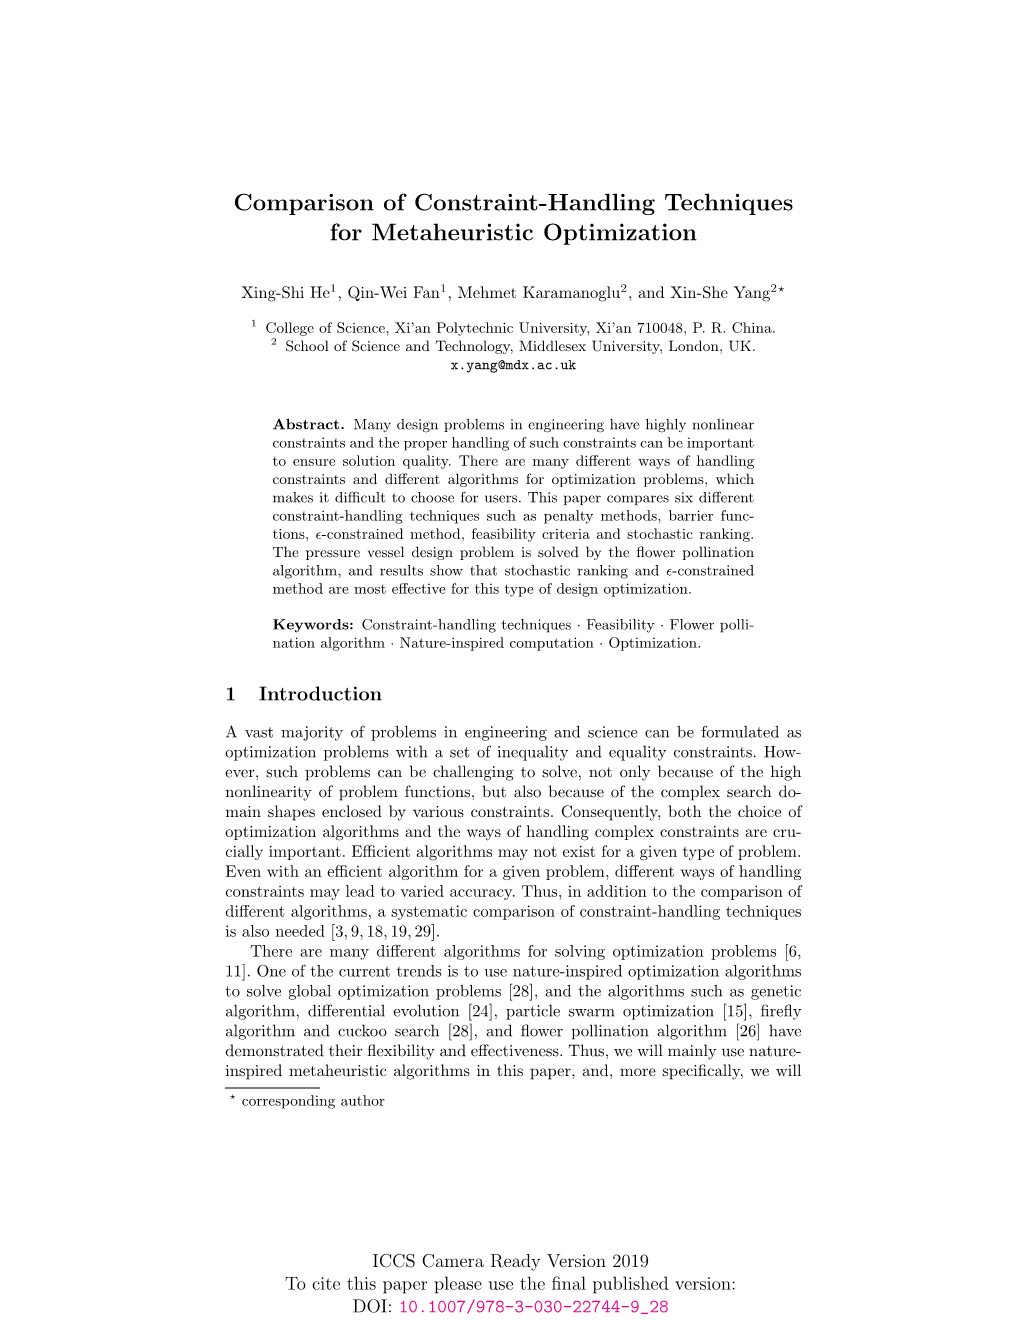 Comparison of Constraint-Handling Techniques for Metaheuristic Optimization